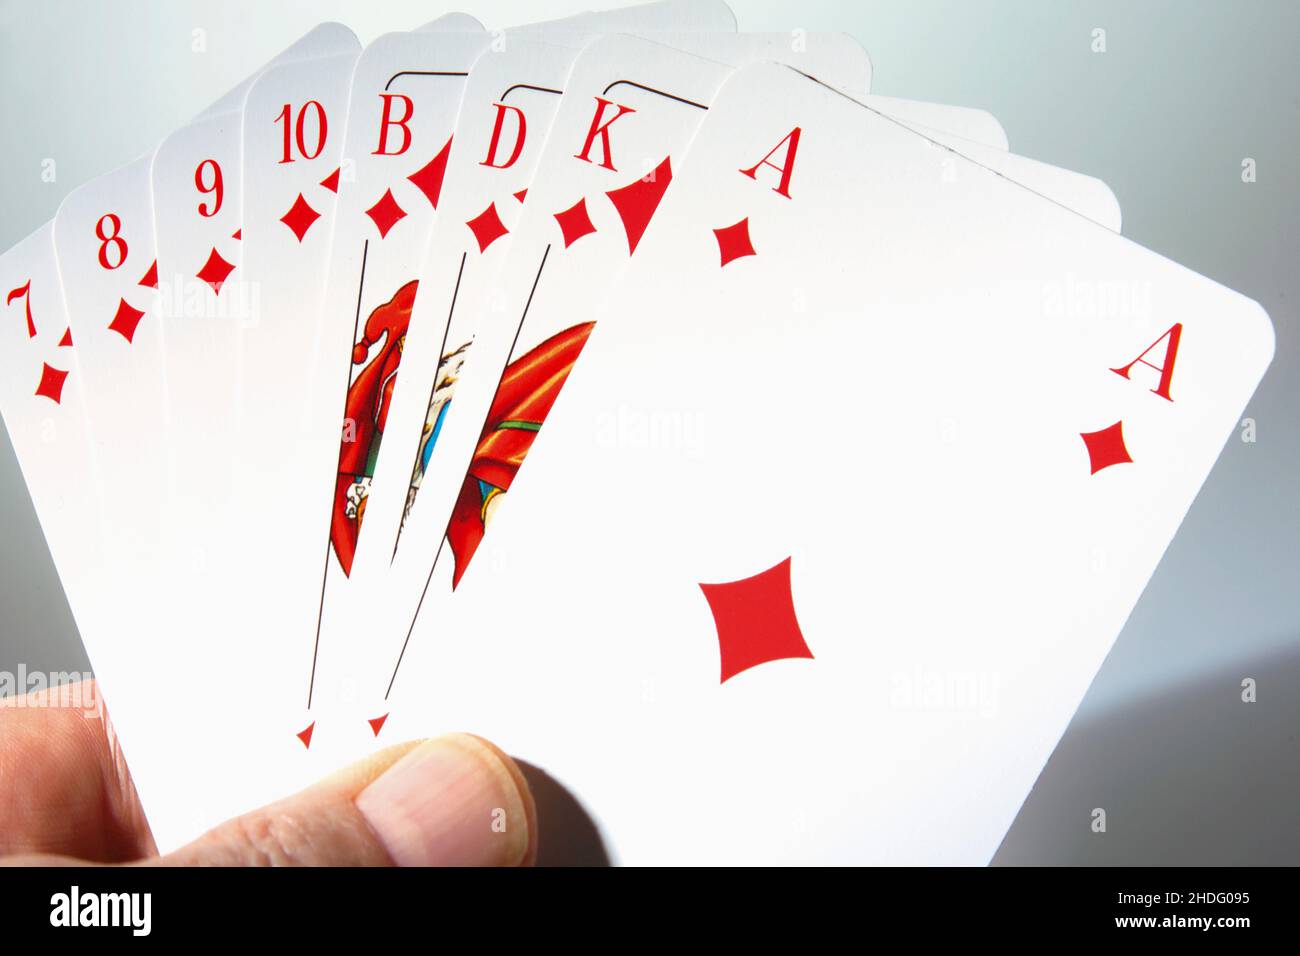 diamond, card game, ranking, diamonds, card games, cards Stock Photo ...